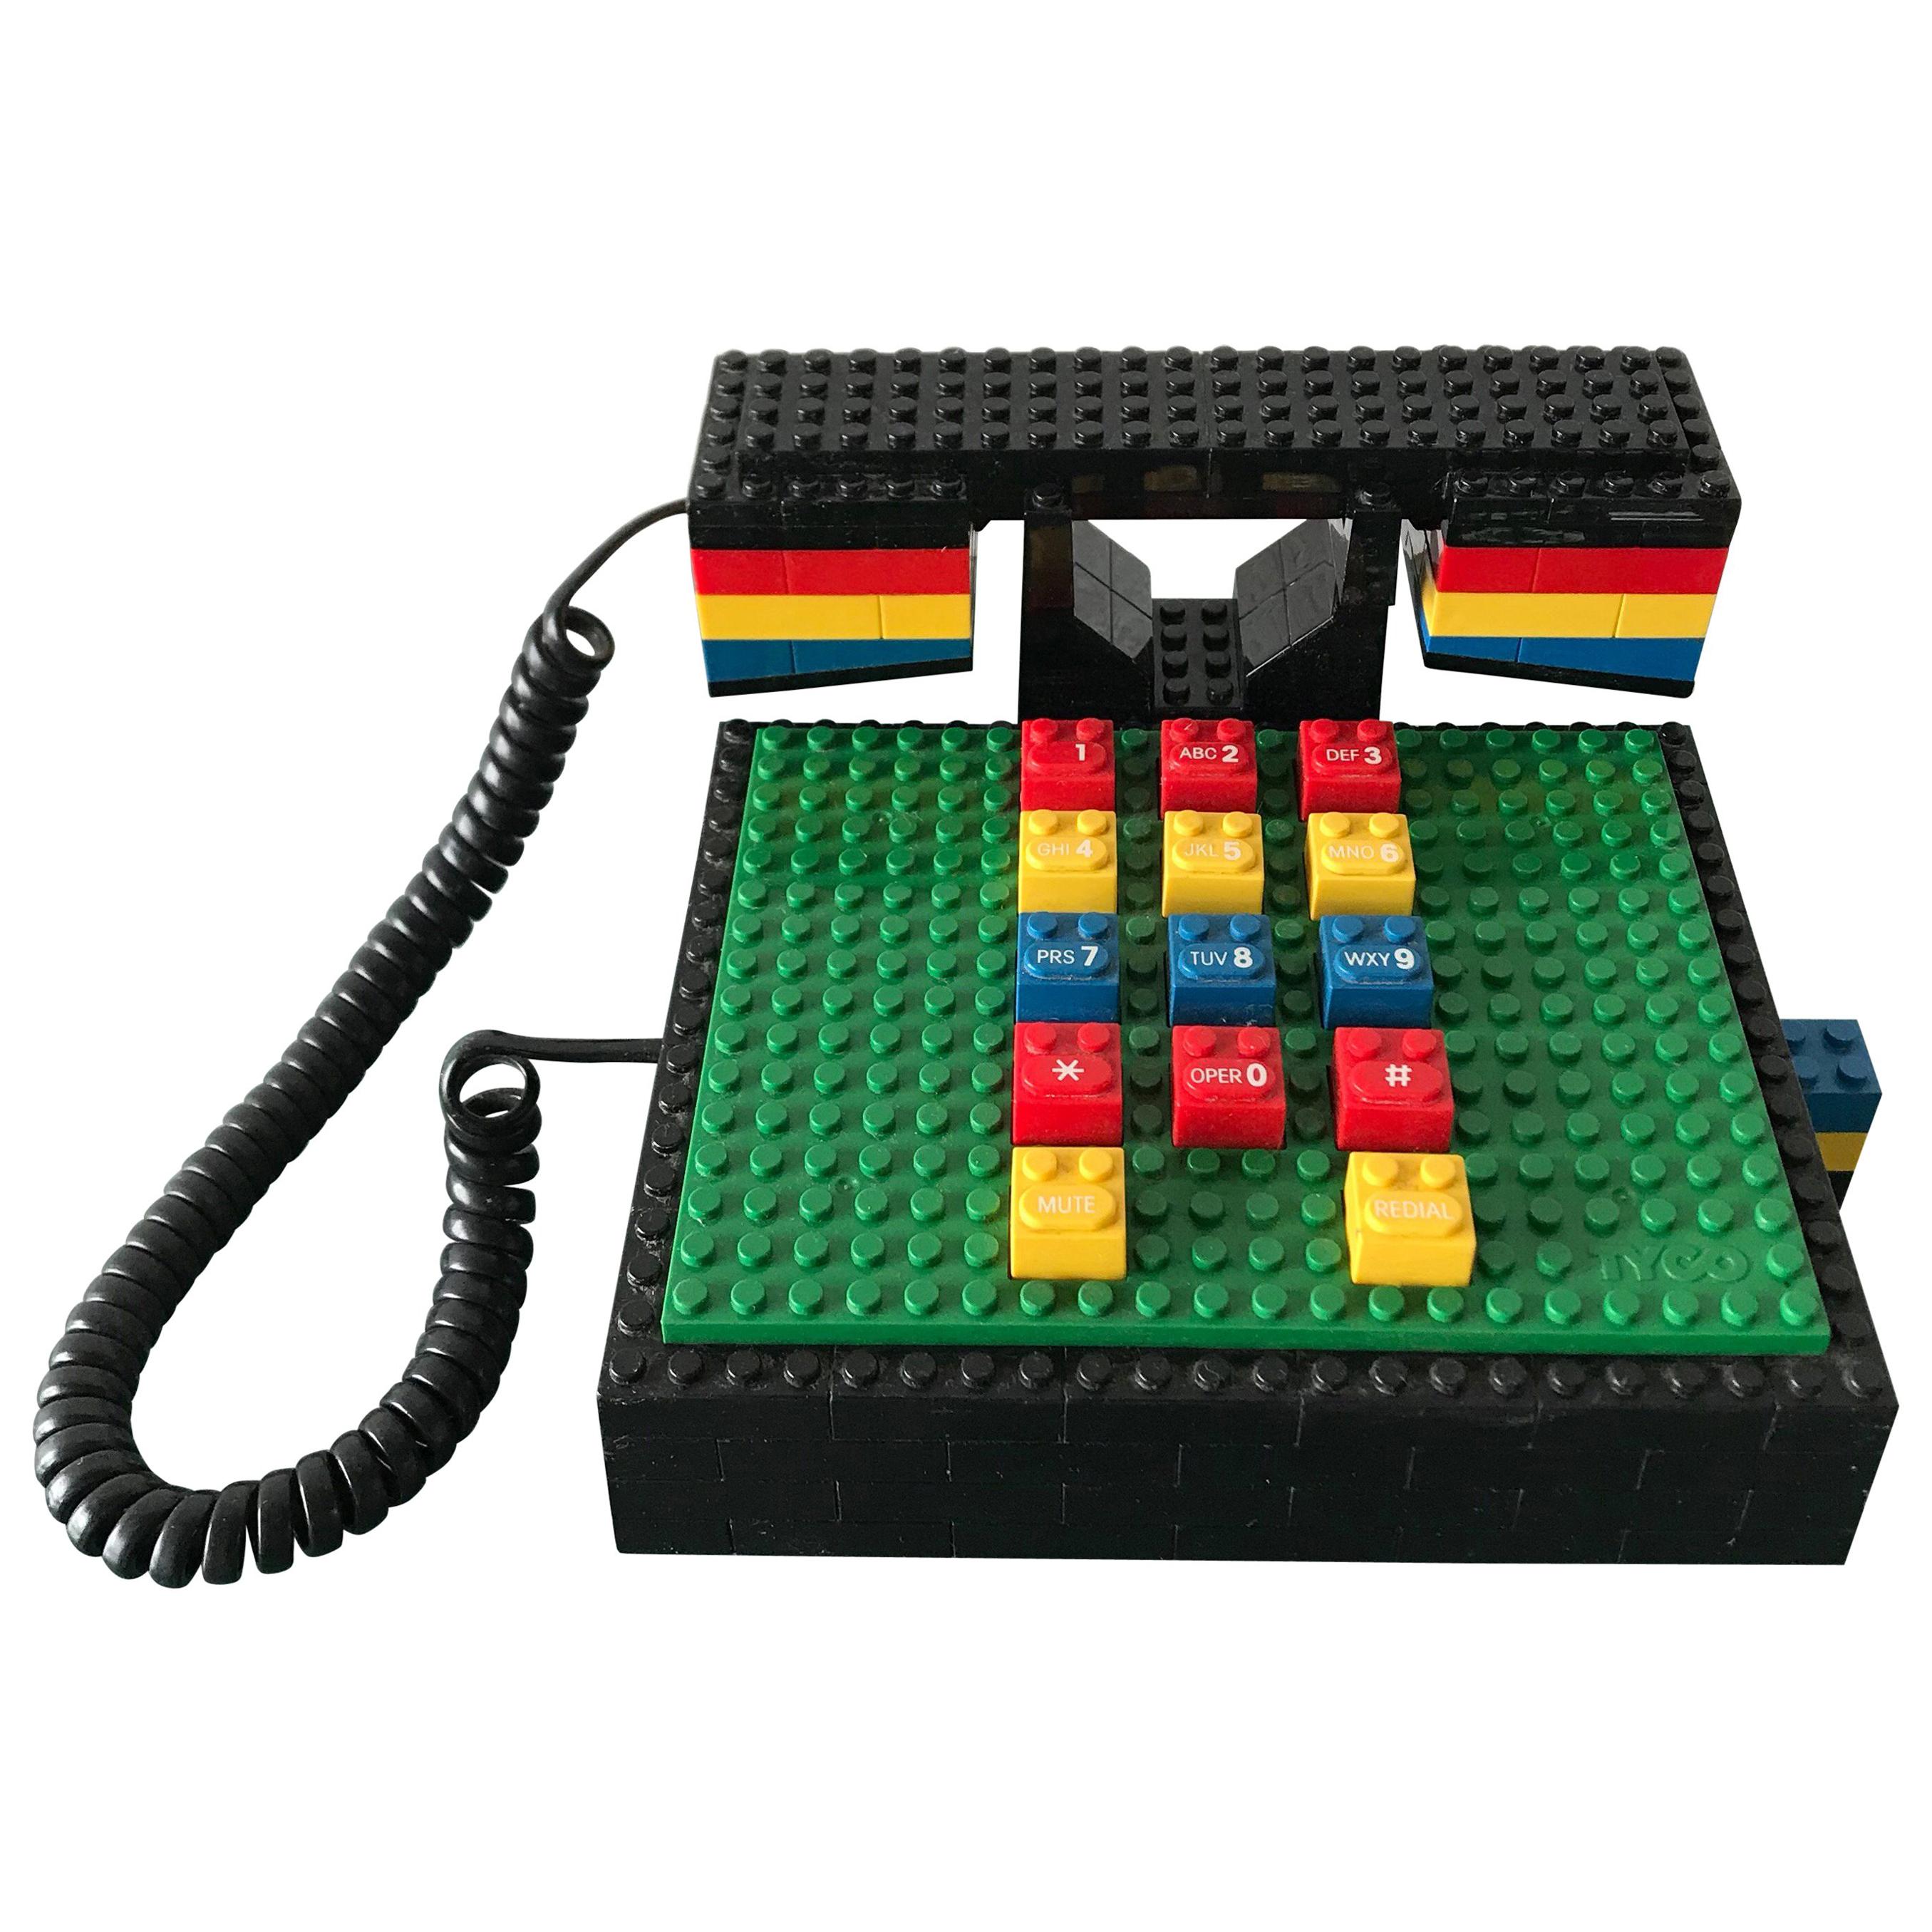 Postmodern “LEGO” Telephone, Phone by Tyco